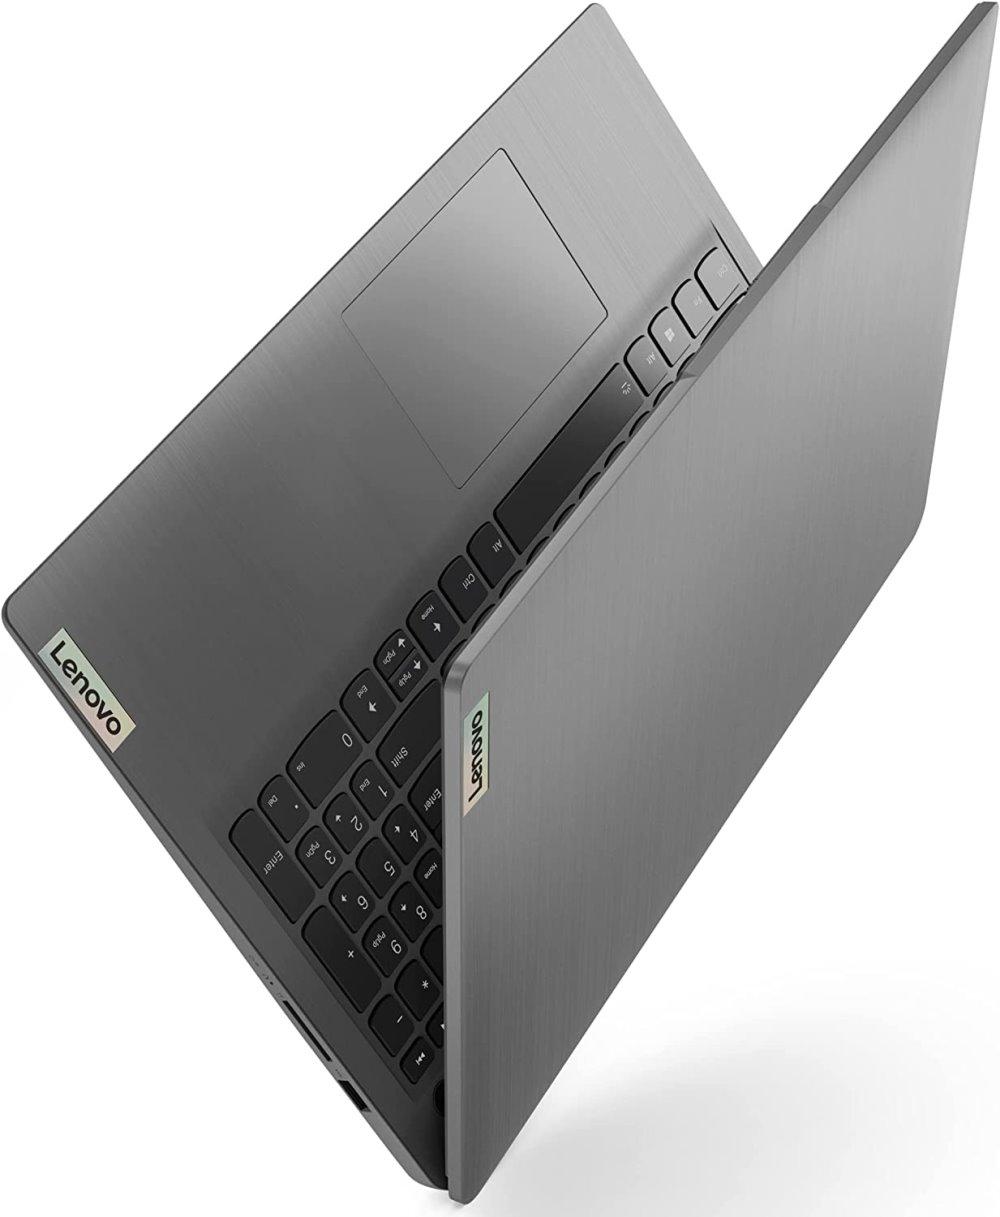 Lenovo IdeaPad 3 Gen 6 laptop